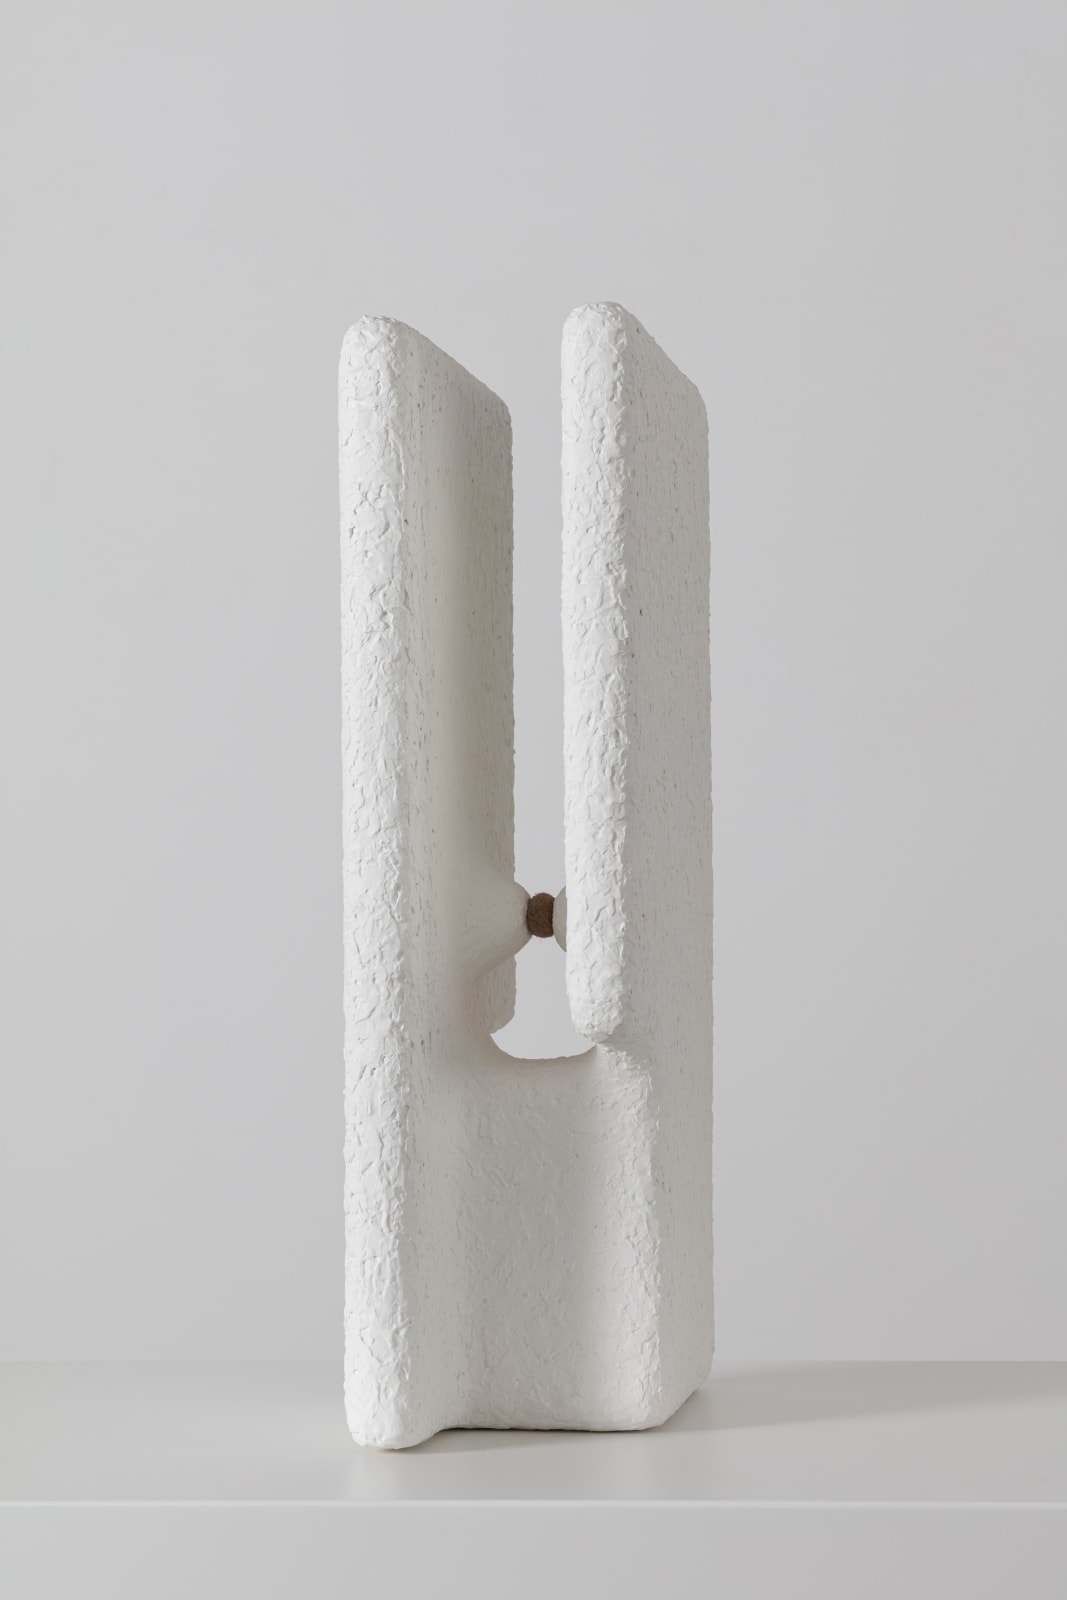 Nebiba, 2019 Polysterene, fiberglass, stucco, posidonia 50 x 32 x 15 cm | 19 3/4 x 12 5/8 x 5 7/8 in